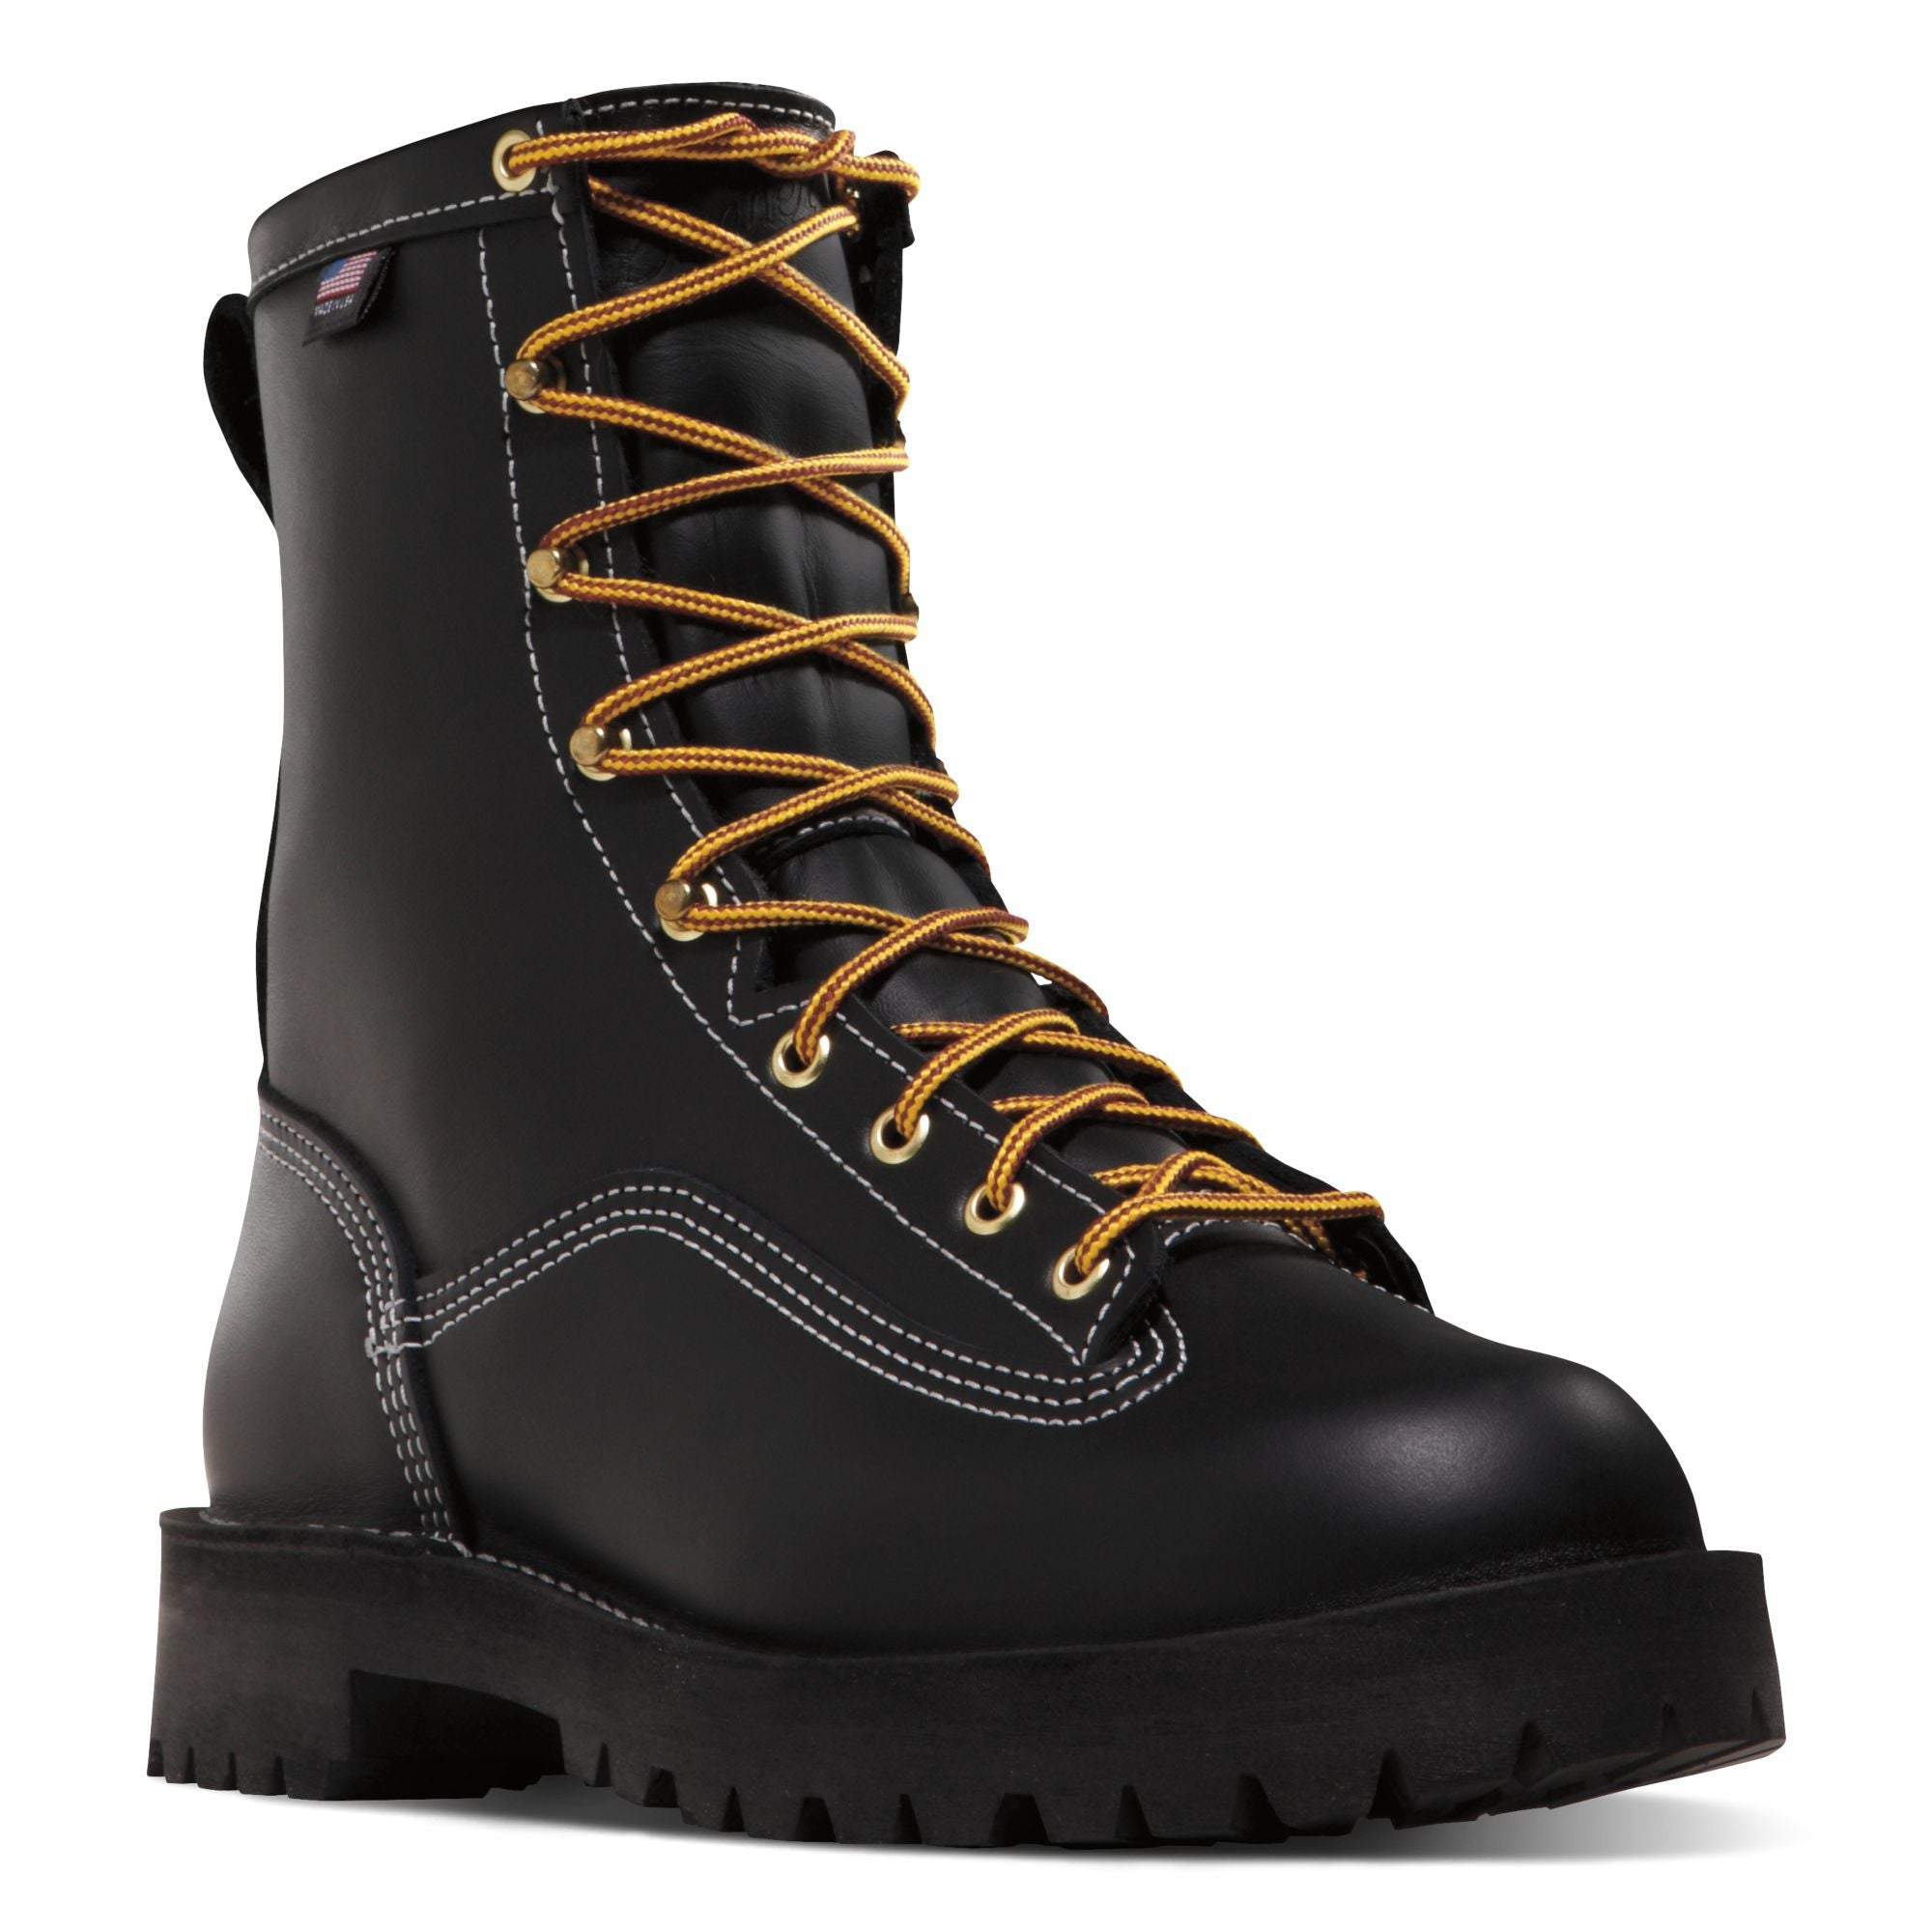 Danner Men's Rain Forest USA Made 8" Comp Toe WP Work Boot Black 11550 7 / Medium / Black - Overlook Boots